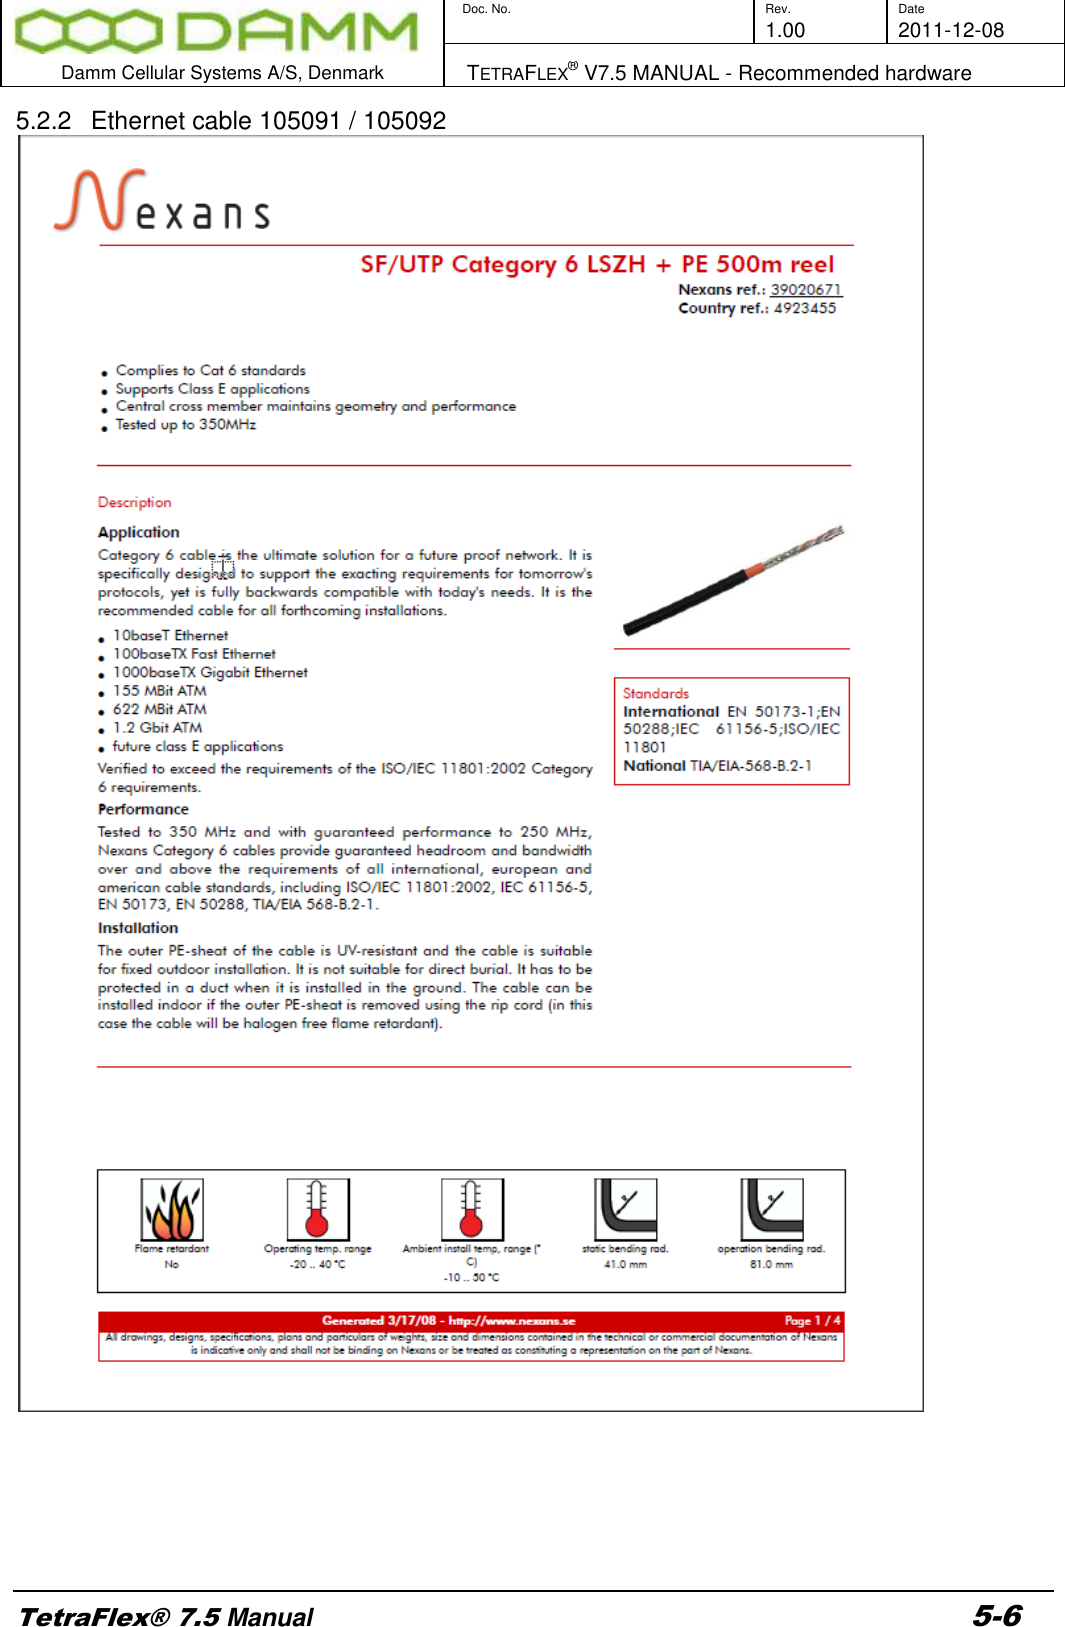        Doc. No. Rev. Date     1.00 2011-12-08  Damm Cellular Systems A/S, Denmark   TETRAFLEX® V7.5 MANUAL - Recommended hardware  TetraFlex® 7.5 Manual 5-6 5.2.2  Ethernet cable 105091 / 105092   